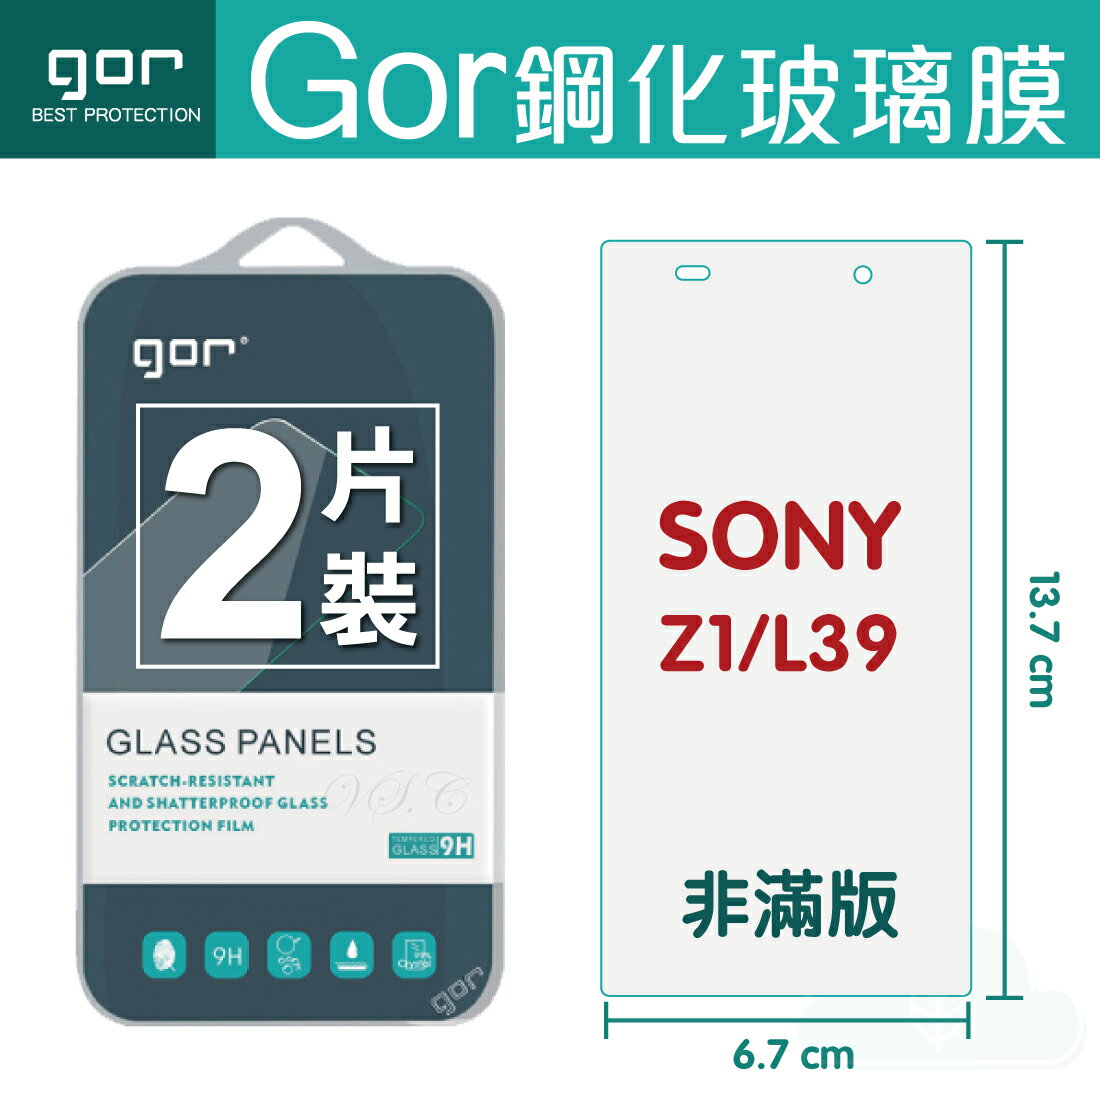 【SONY】GOR 9H Xperia Z1 (L39H) 鋼化 玻璃 保護貼 全透明非滿版 兩片裝【全館滿299免運費】